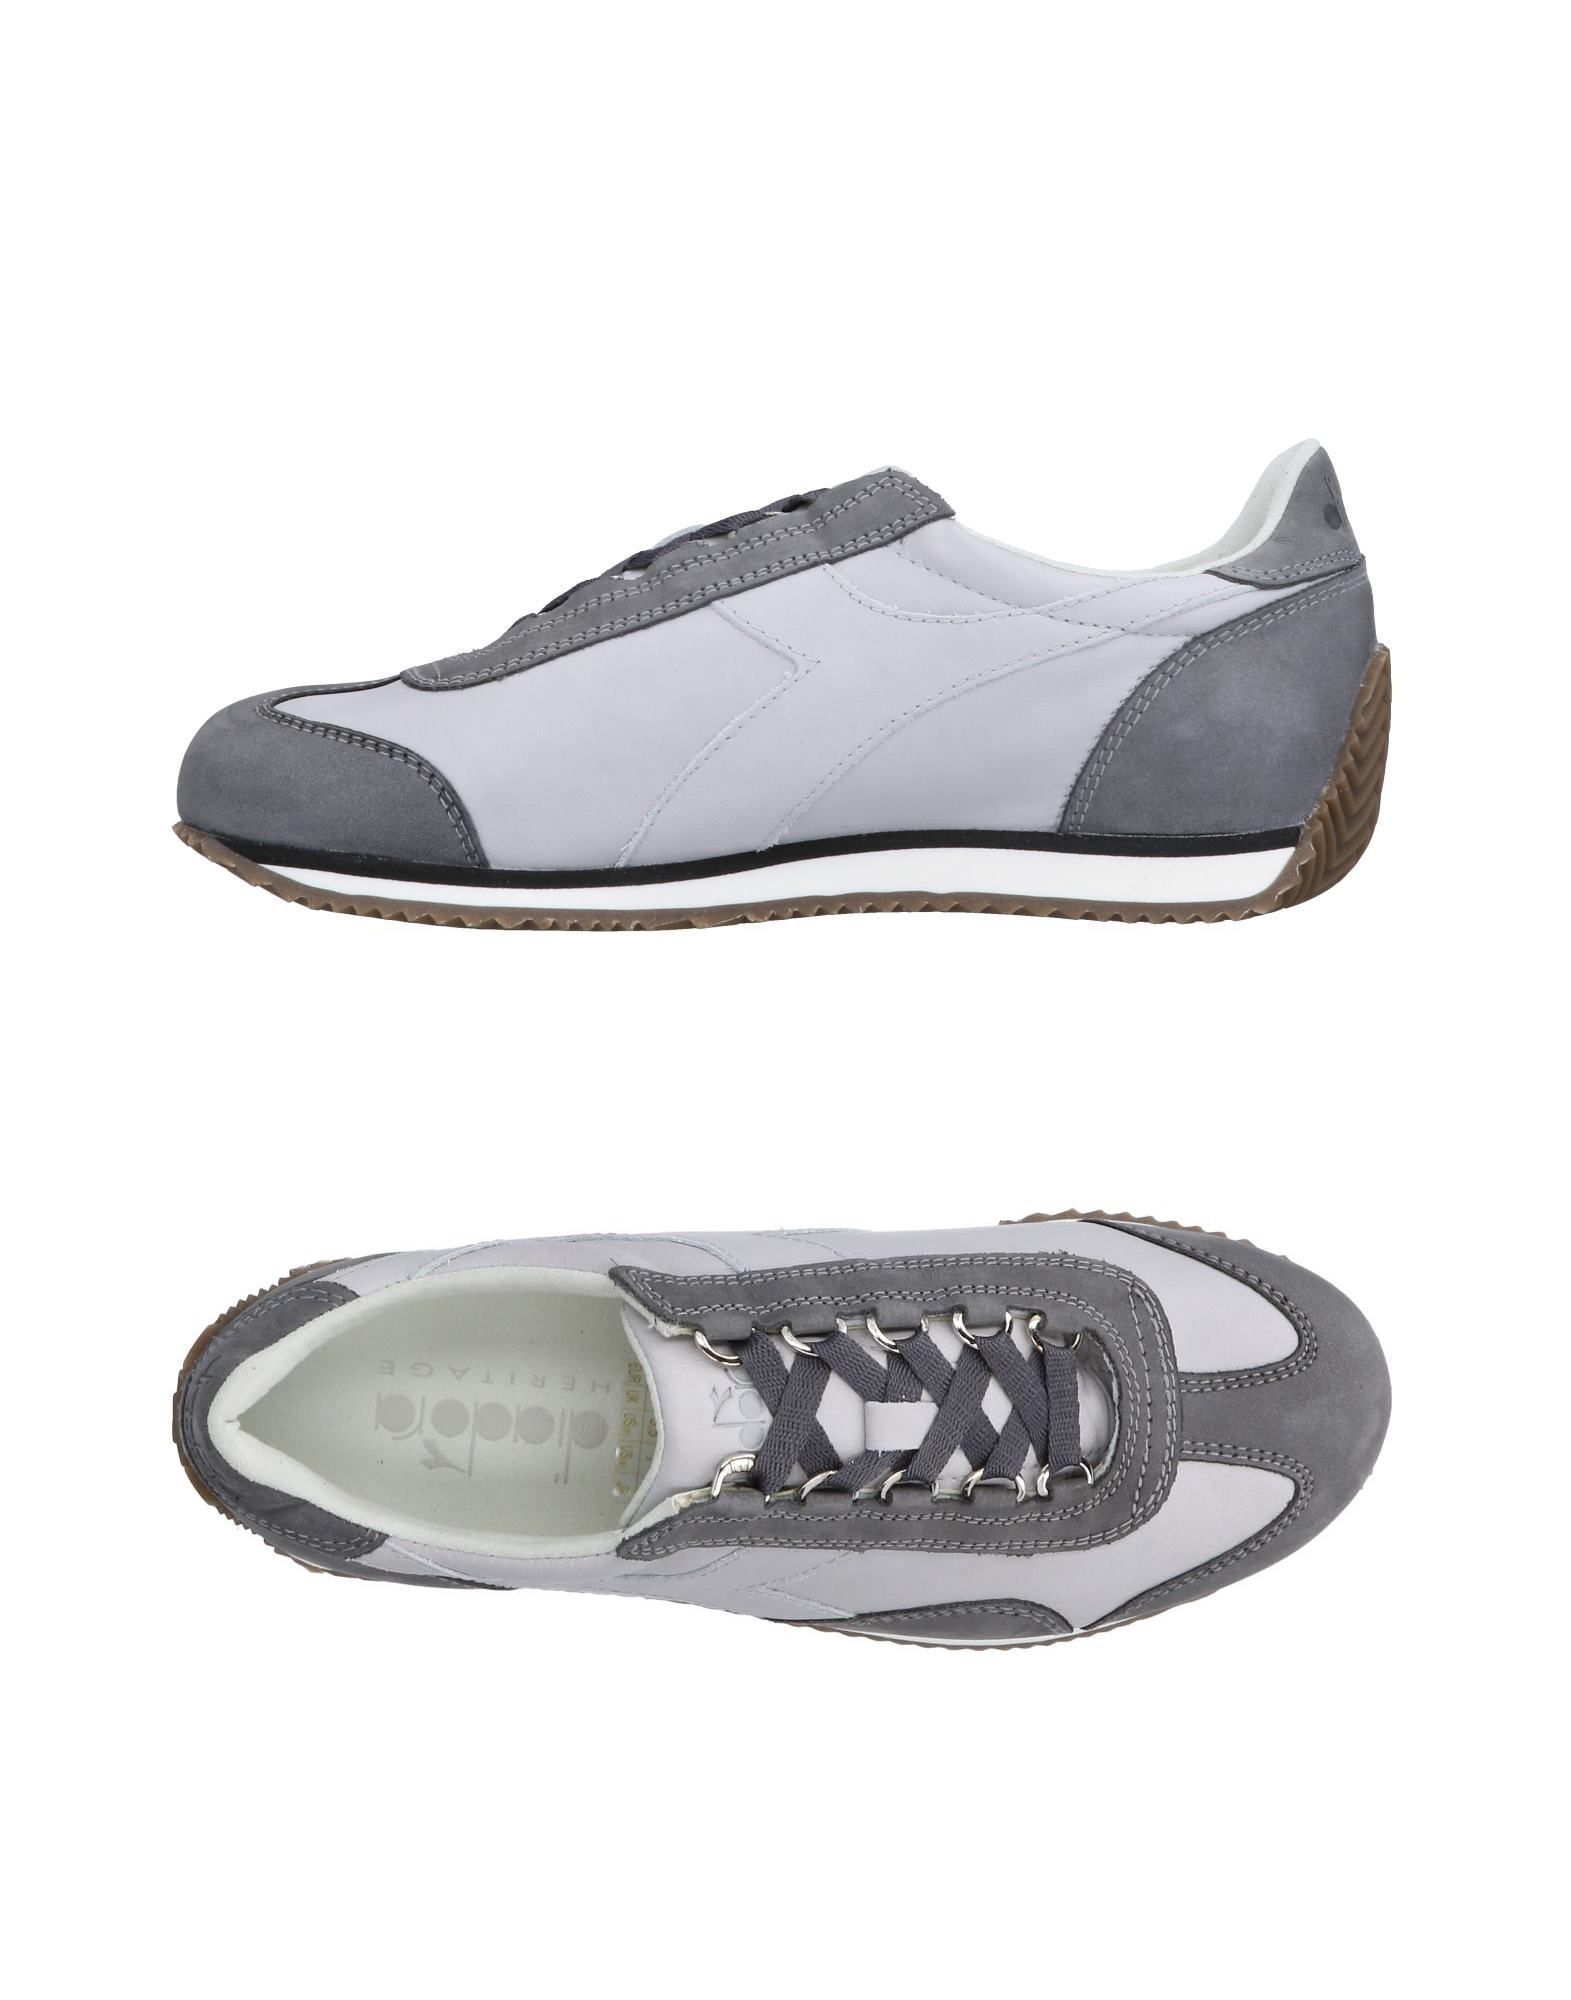 Diadora Heritage Grey Leather Sneakers